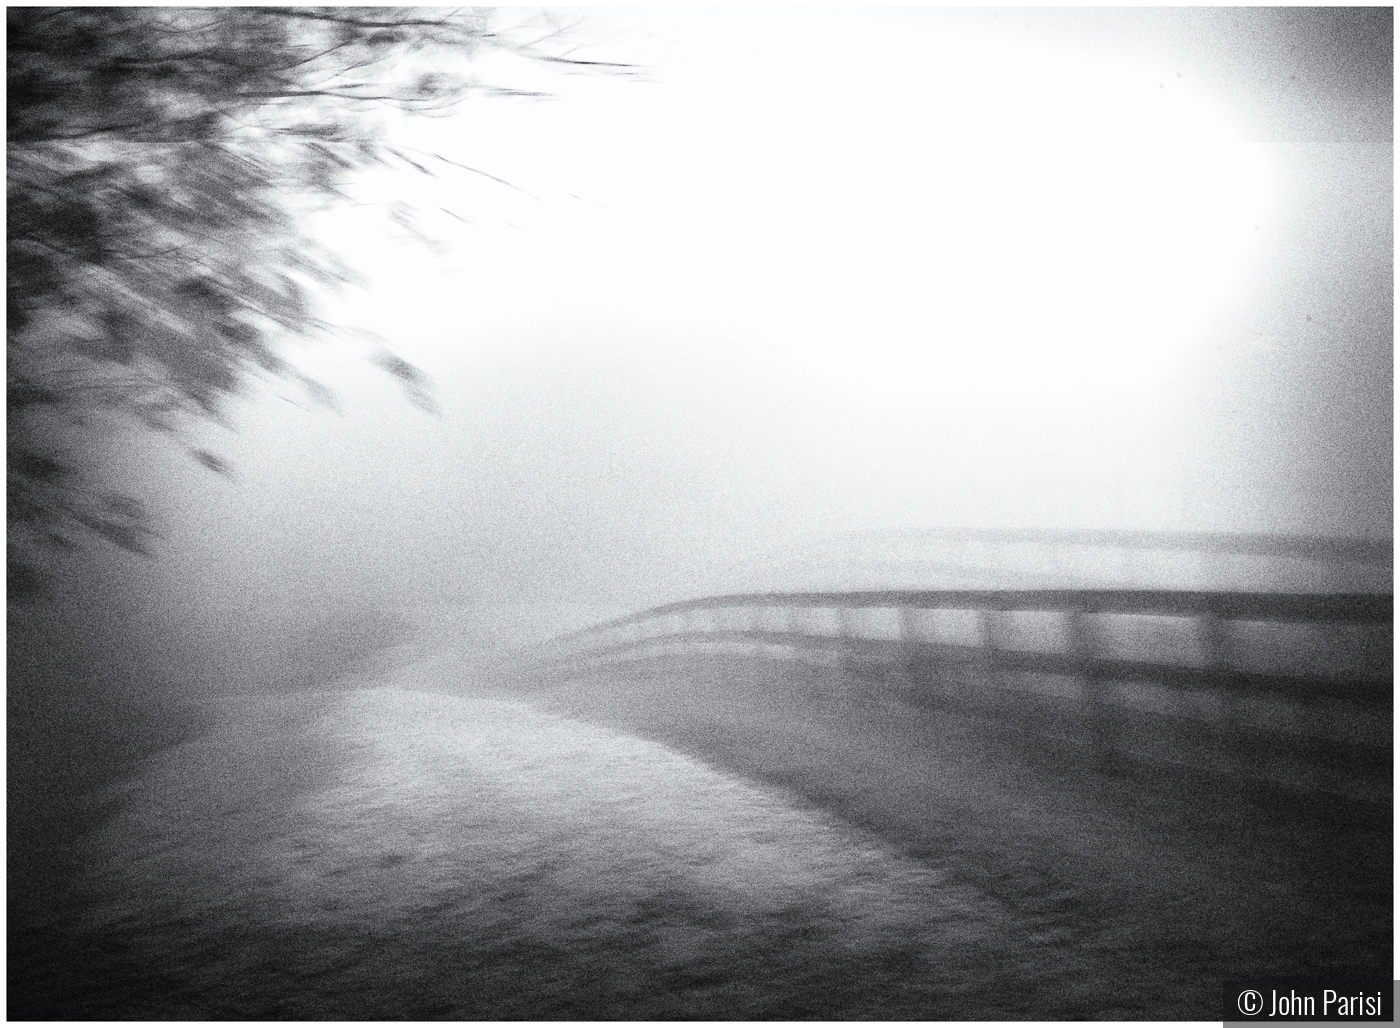 more fog double exposure by John Parisi